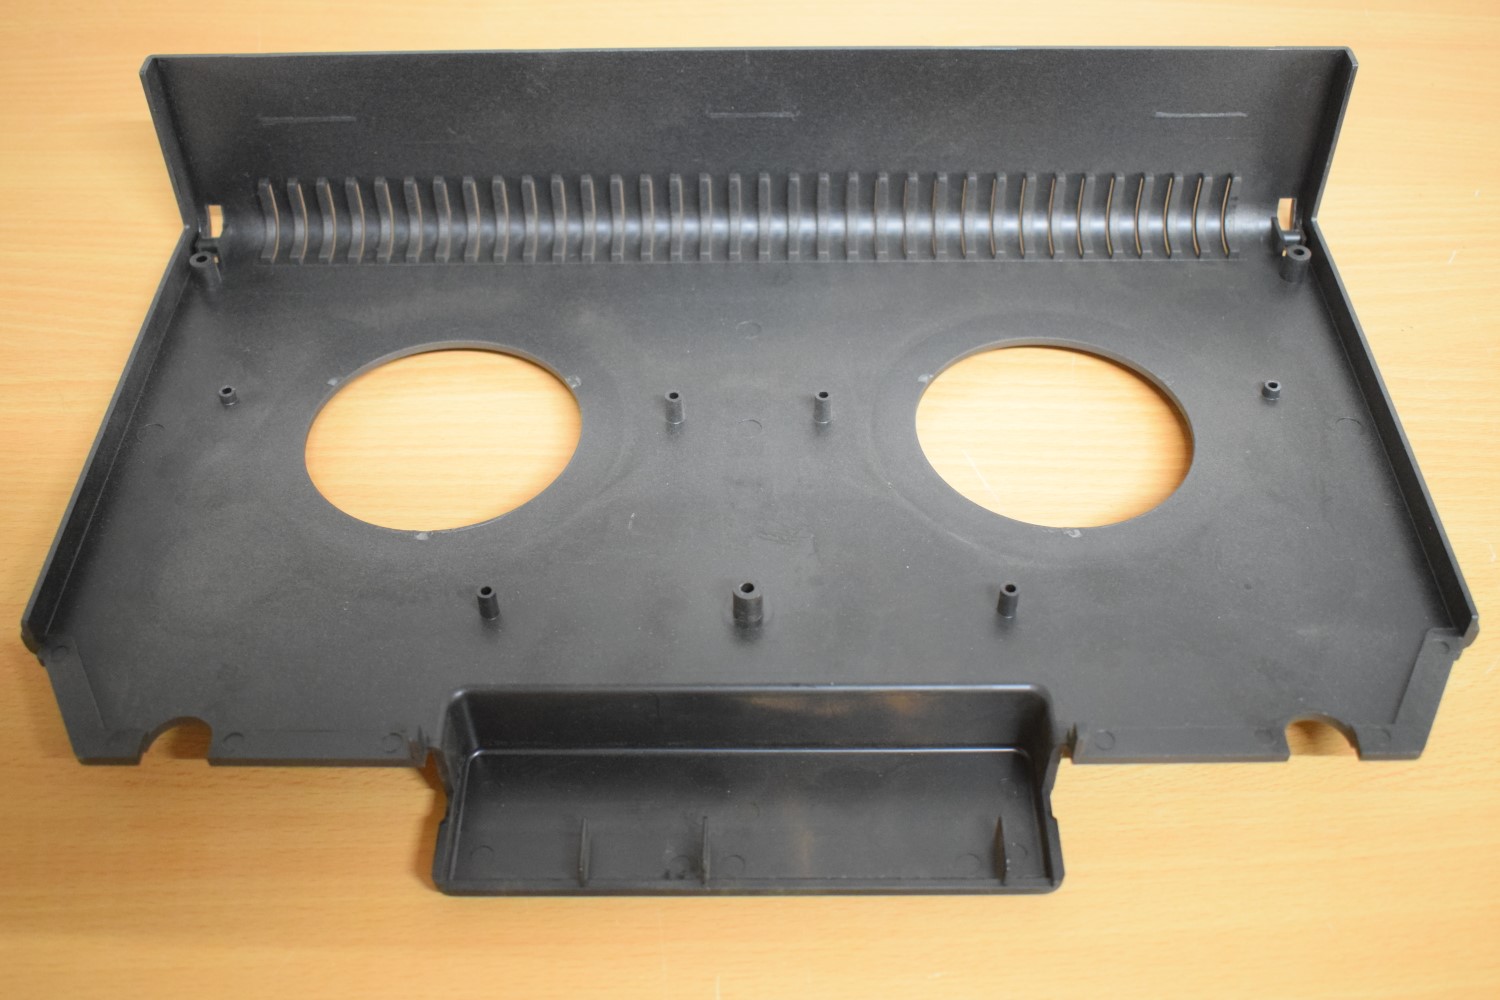 Philips N4504/N4512/N4420 Tonbandmaschine – Oberteil der Frontplatte 